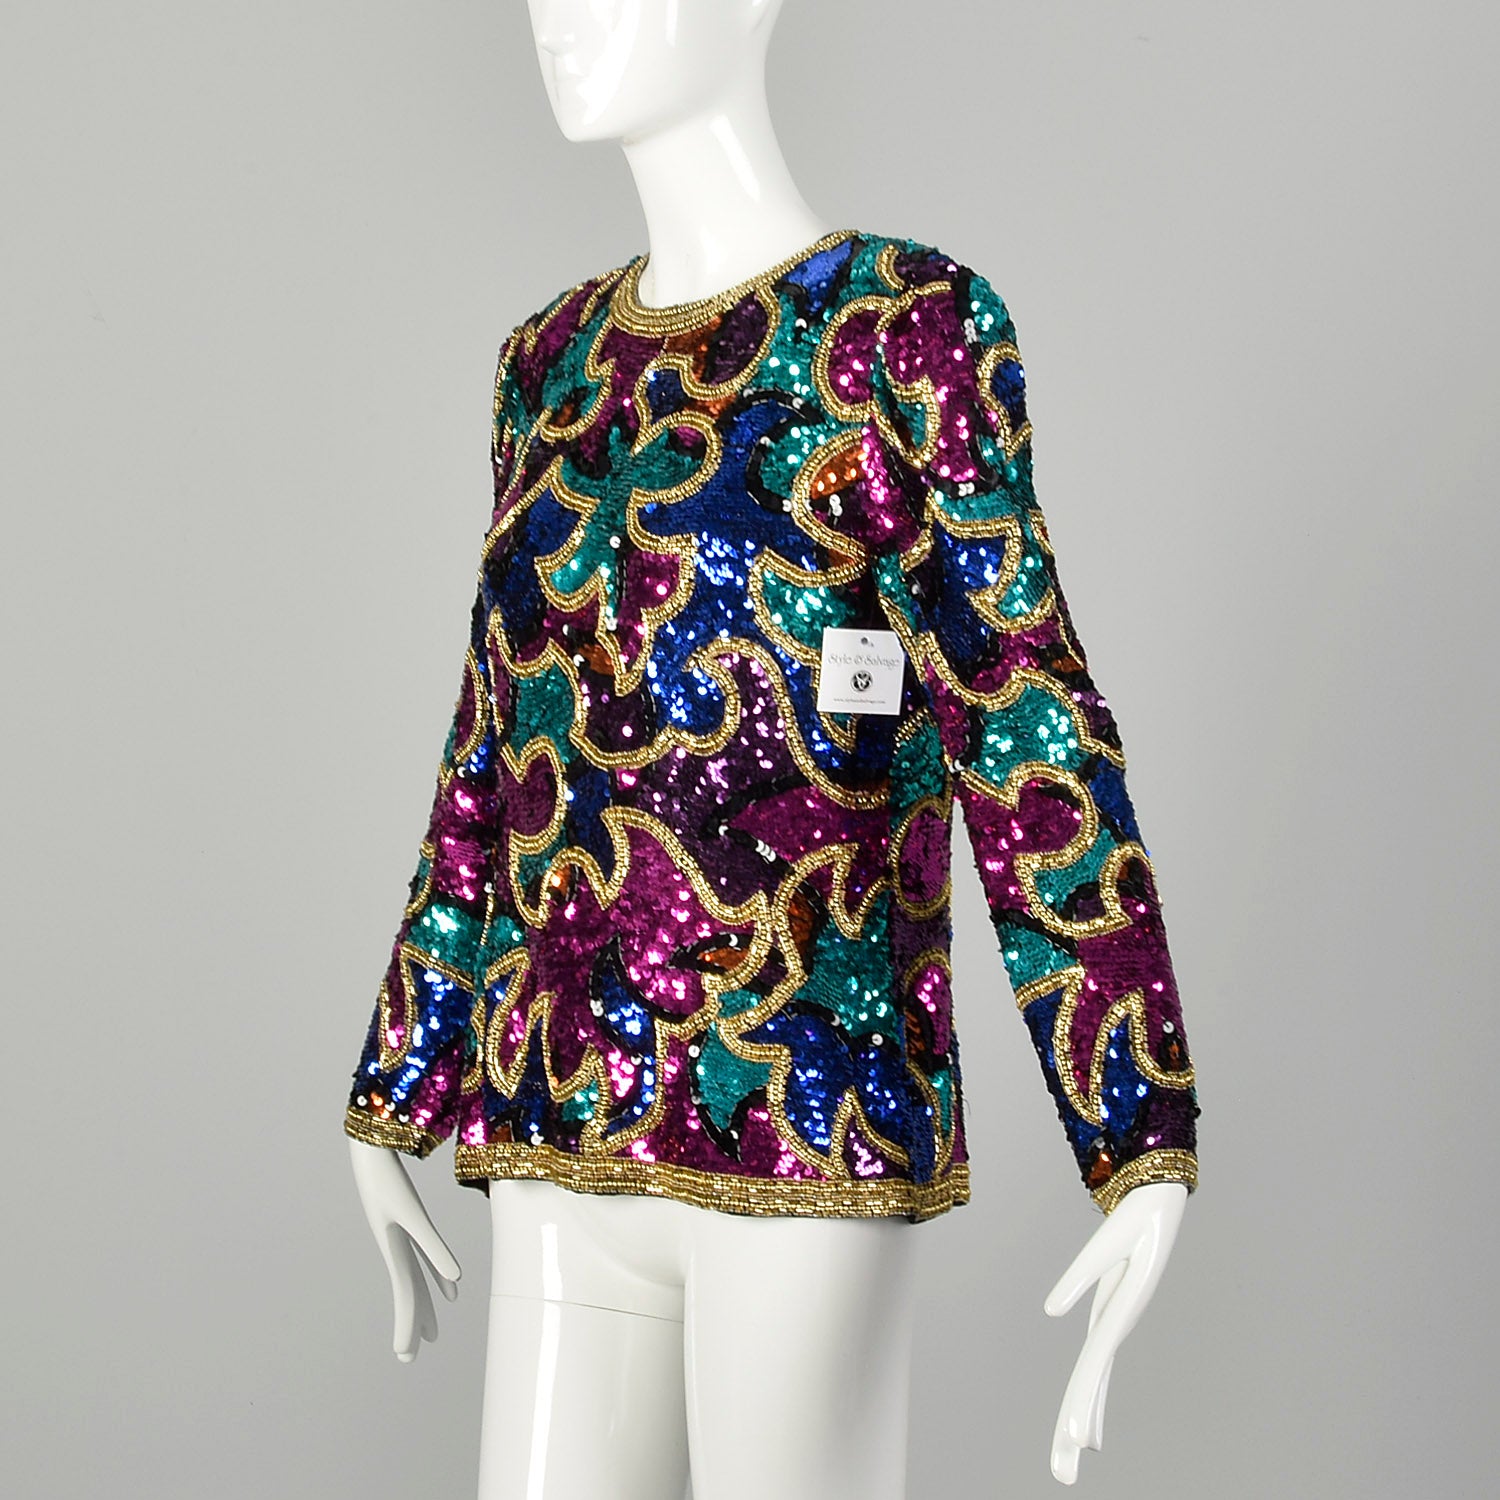 Medium 1990s Oleg Cassini Shirt Multicolored Sequin Formal Long Sleeve Eveningwear